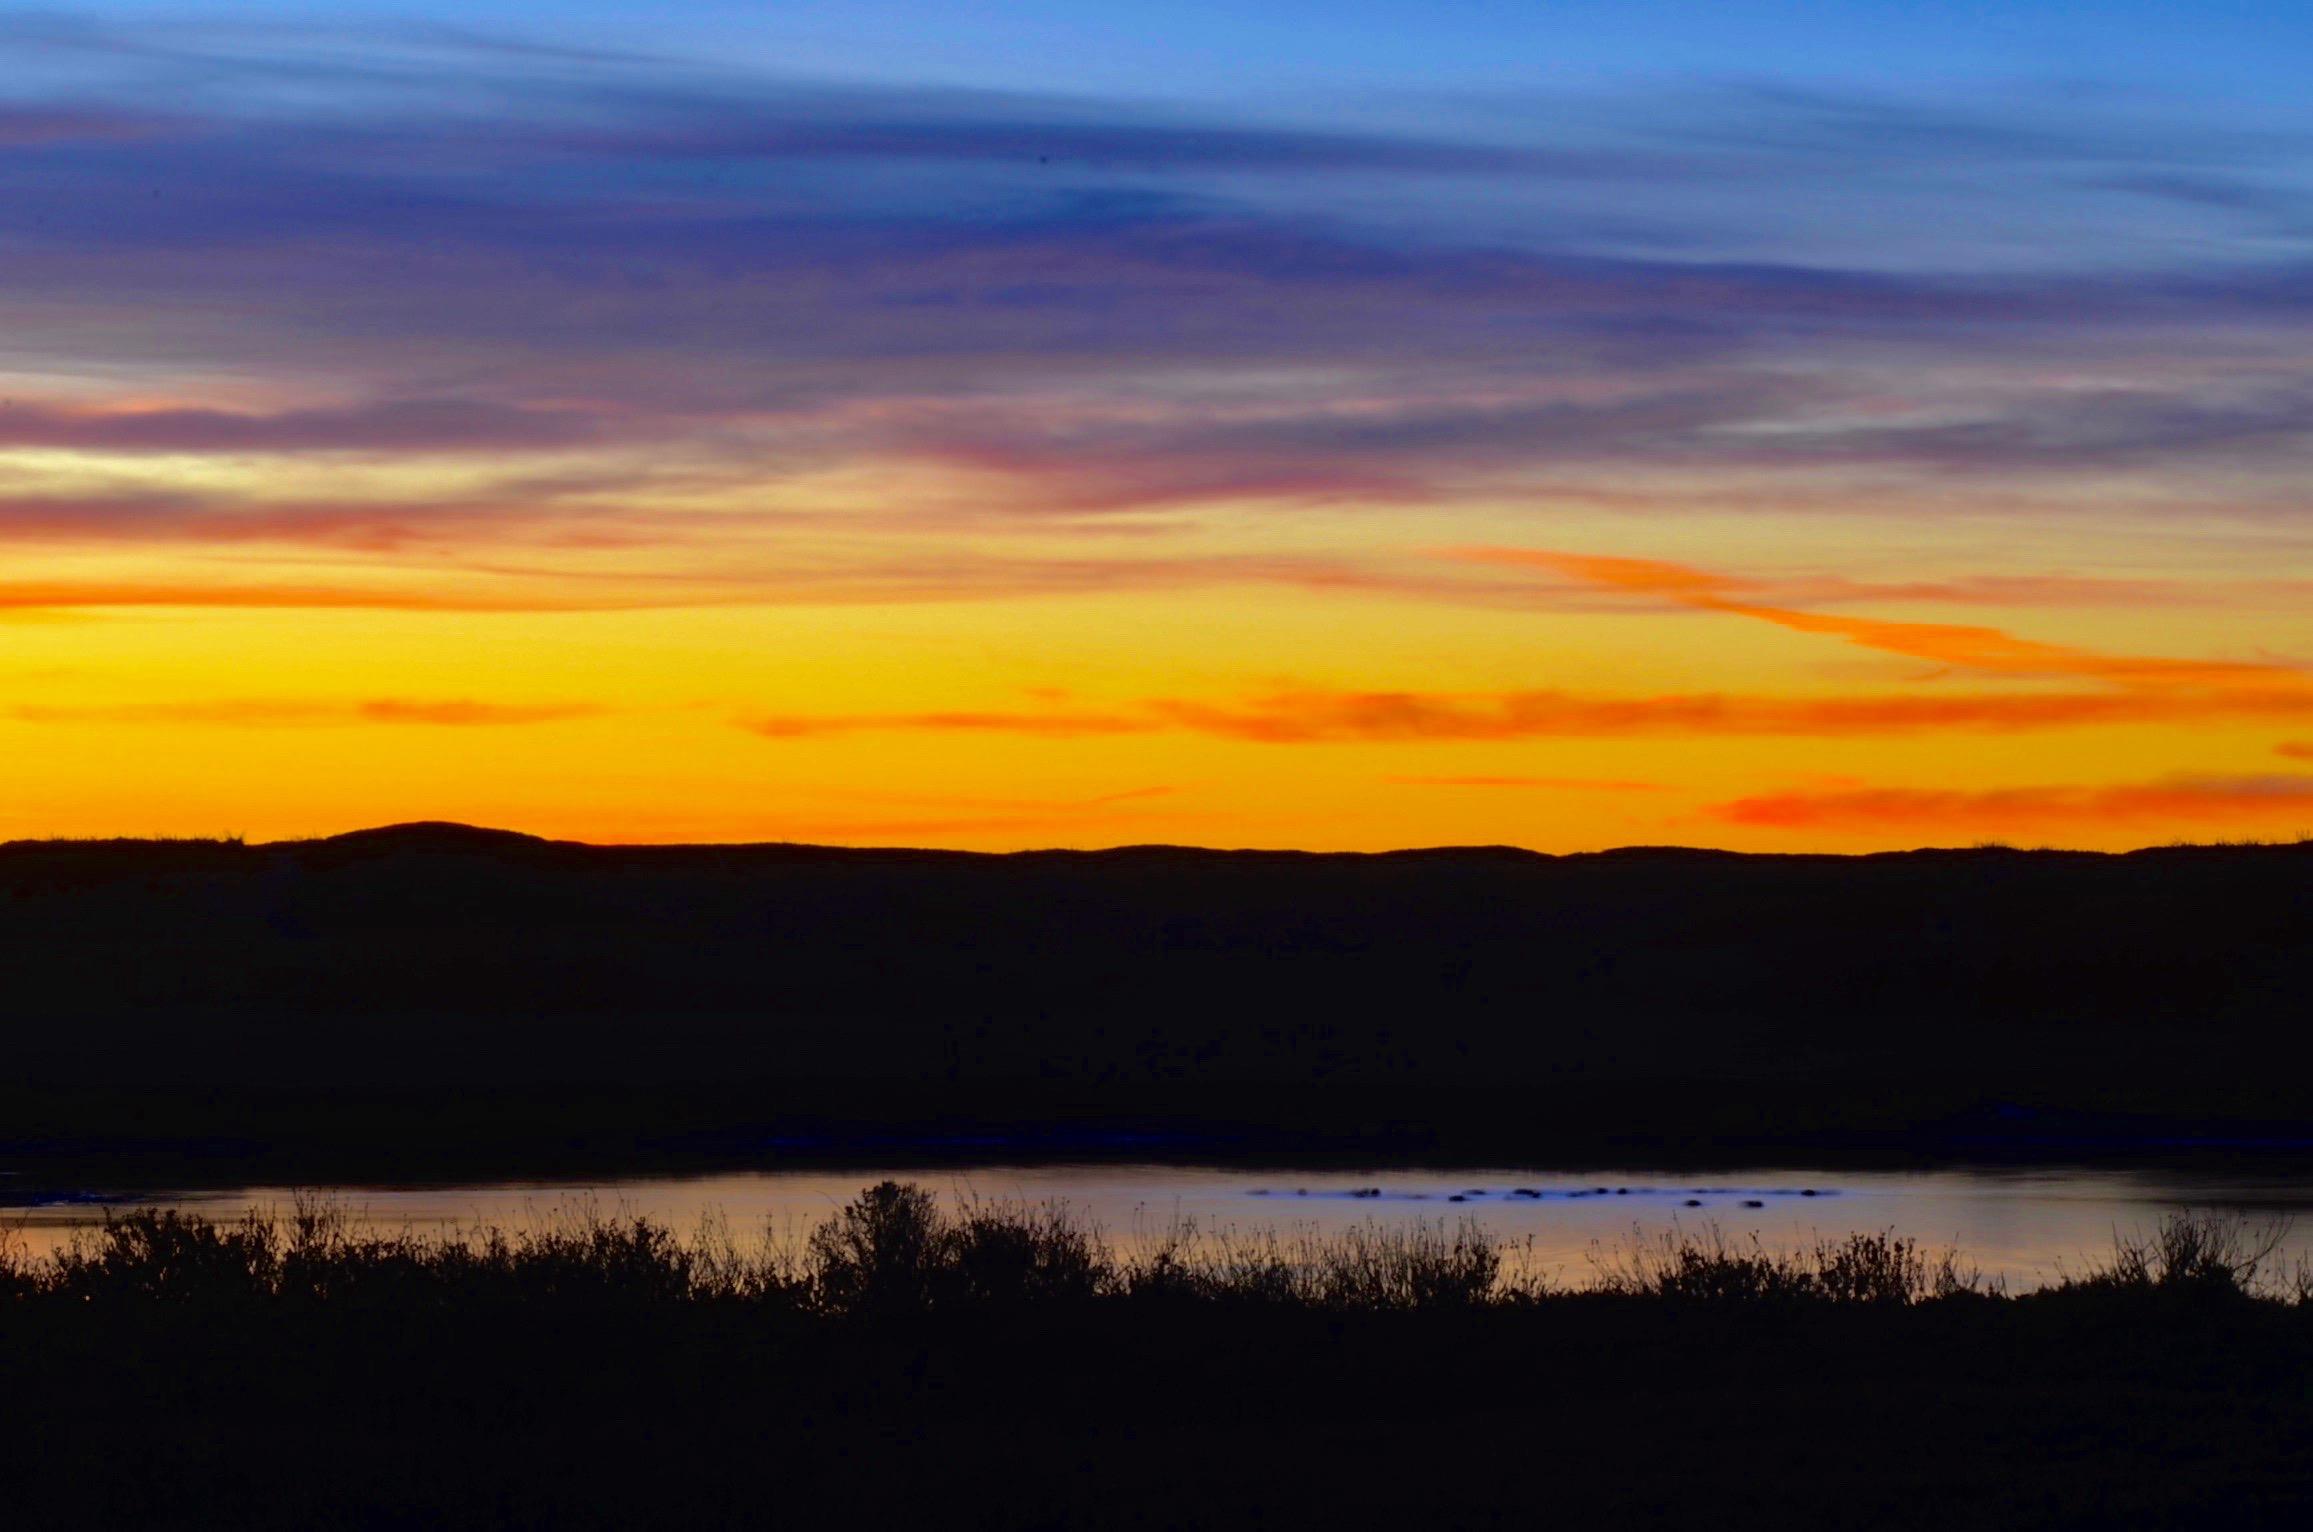 elkhorn slough sunset